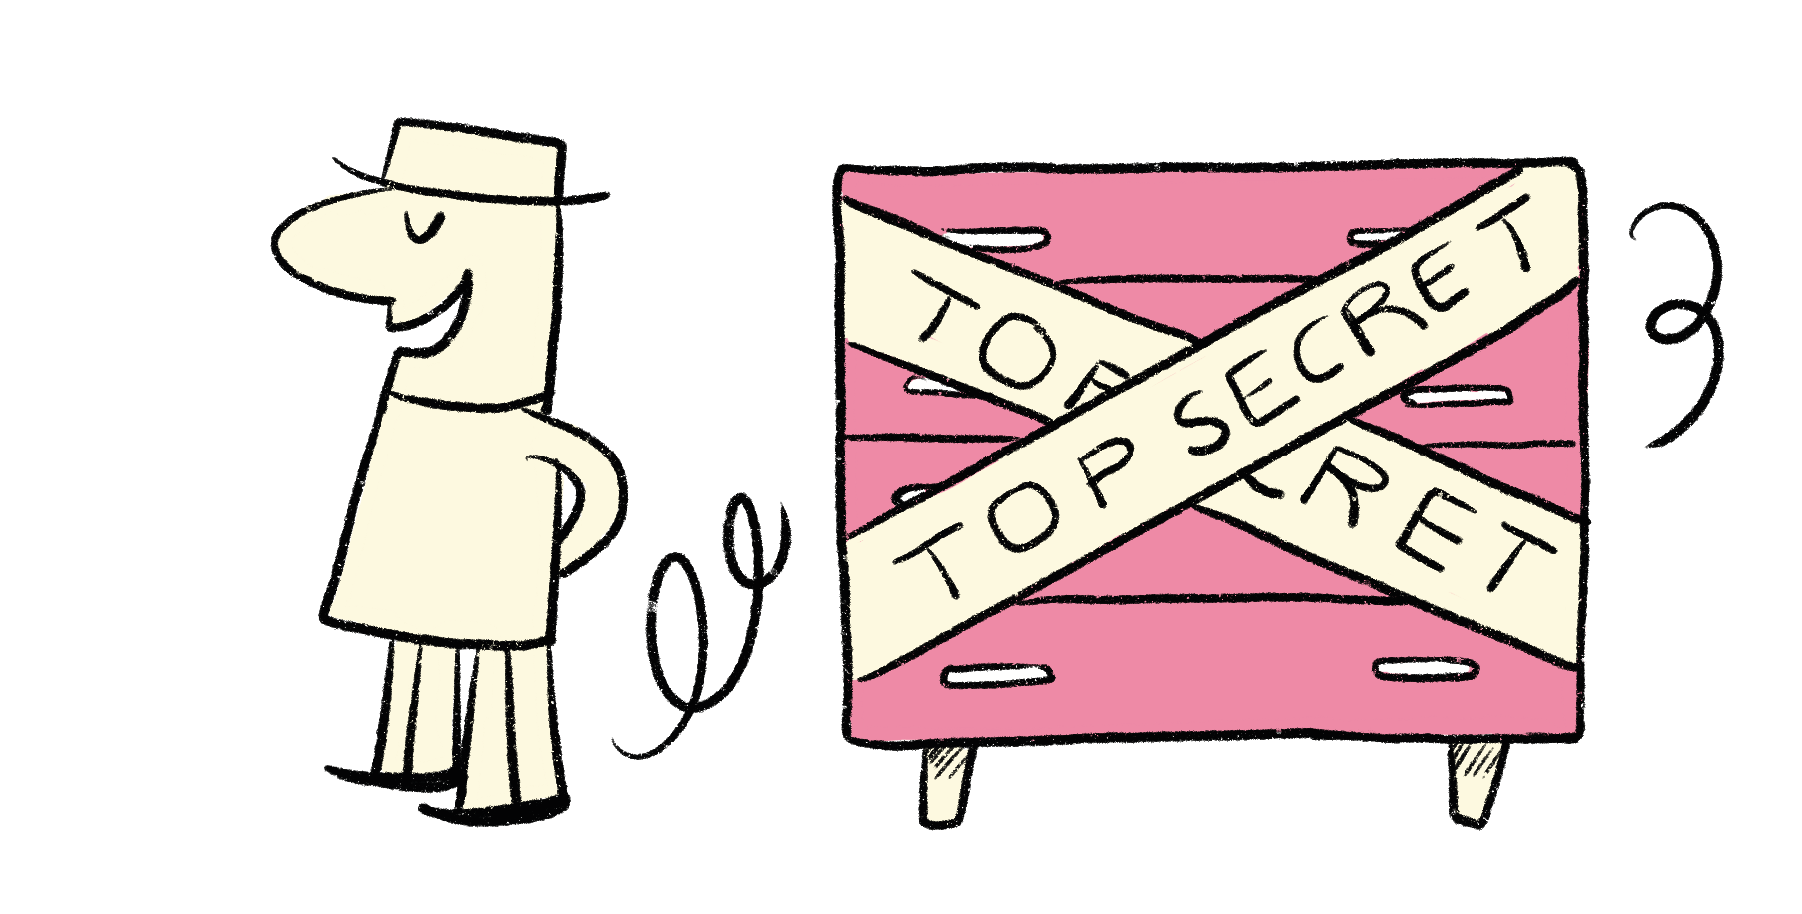 Top secret drawers